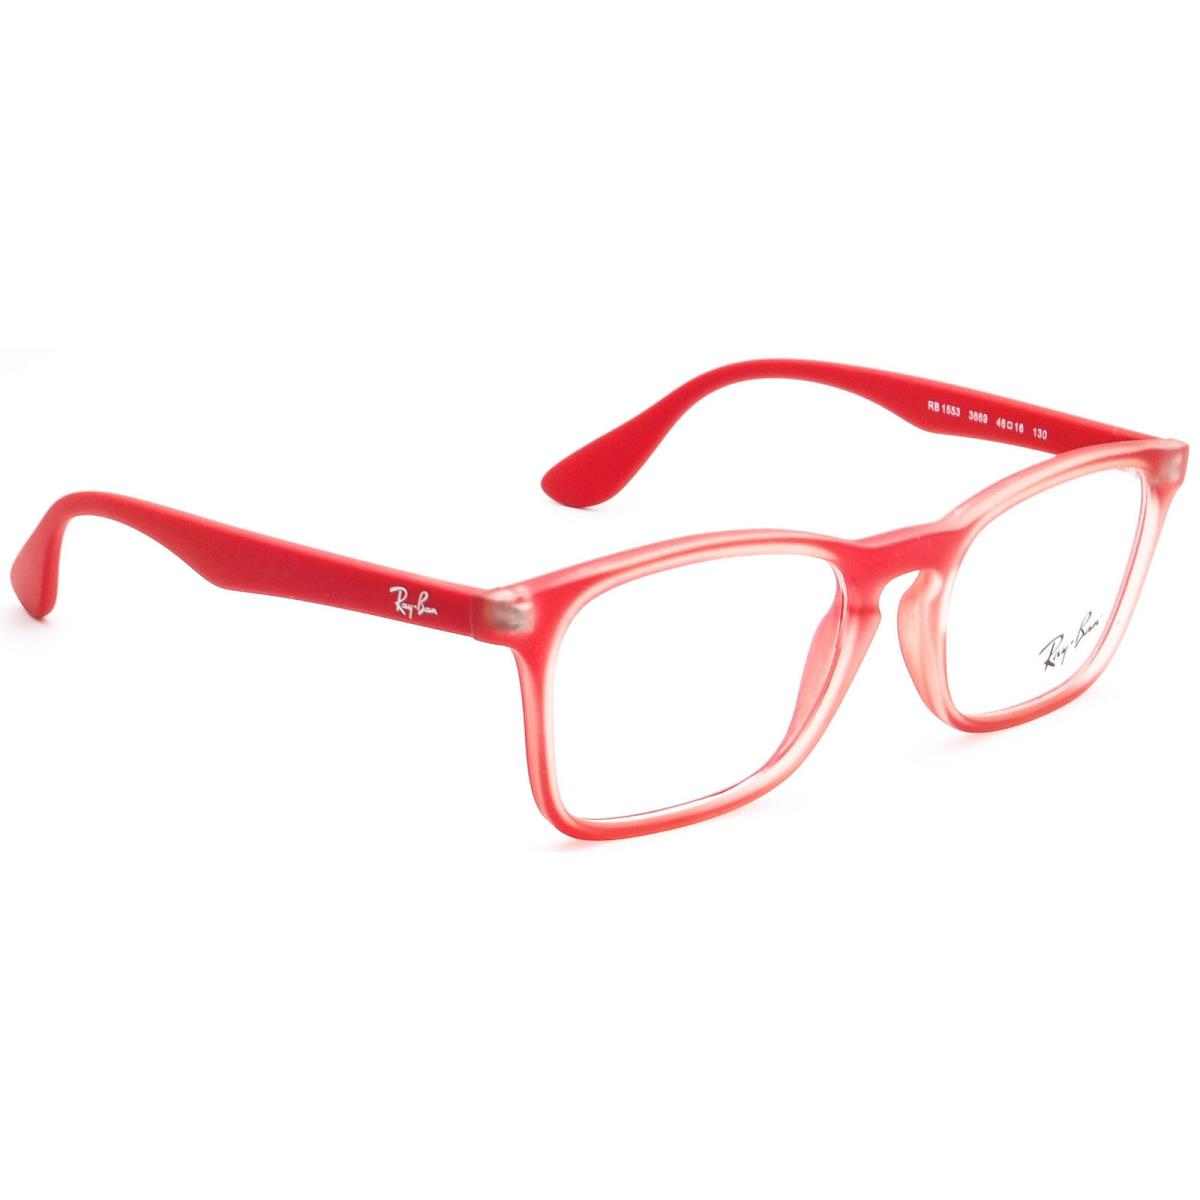 Ray-ban Kids` Eyeglasses RB 1553 3669 Red Rectangular Frame 46 16 130